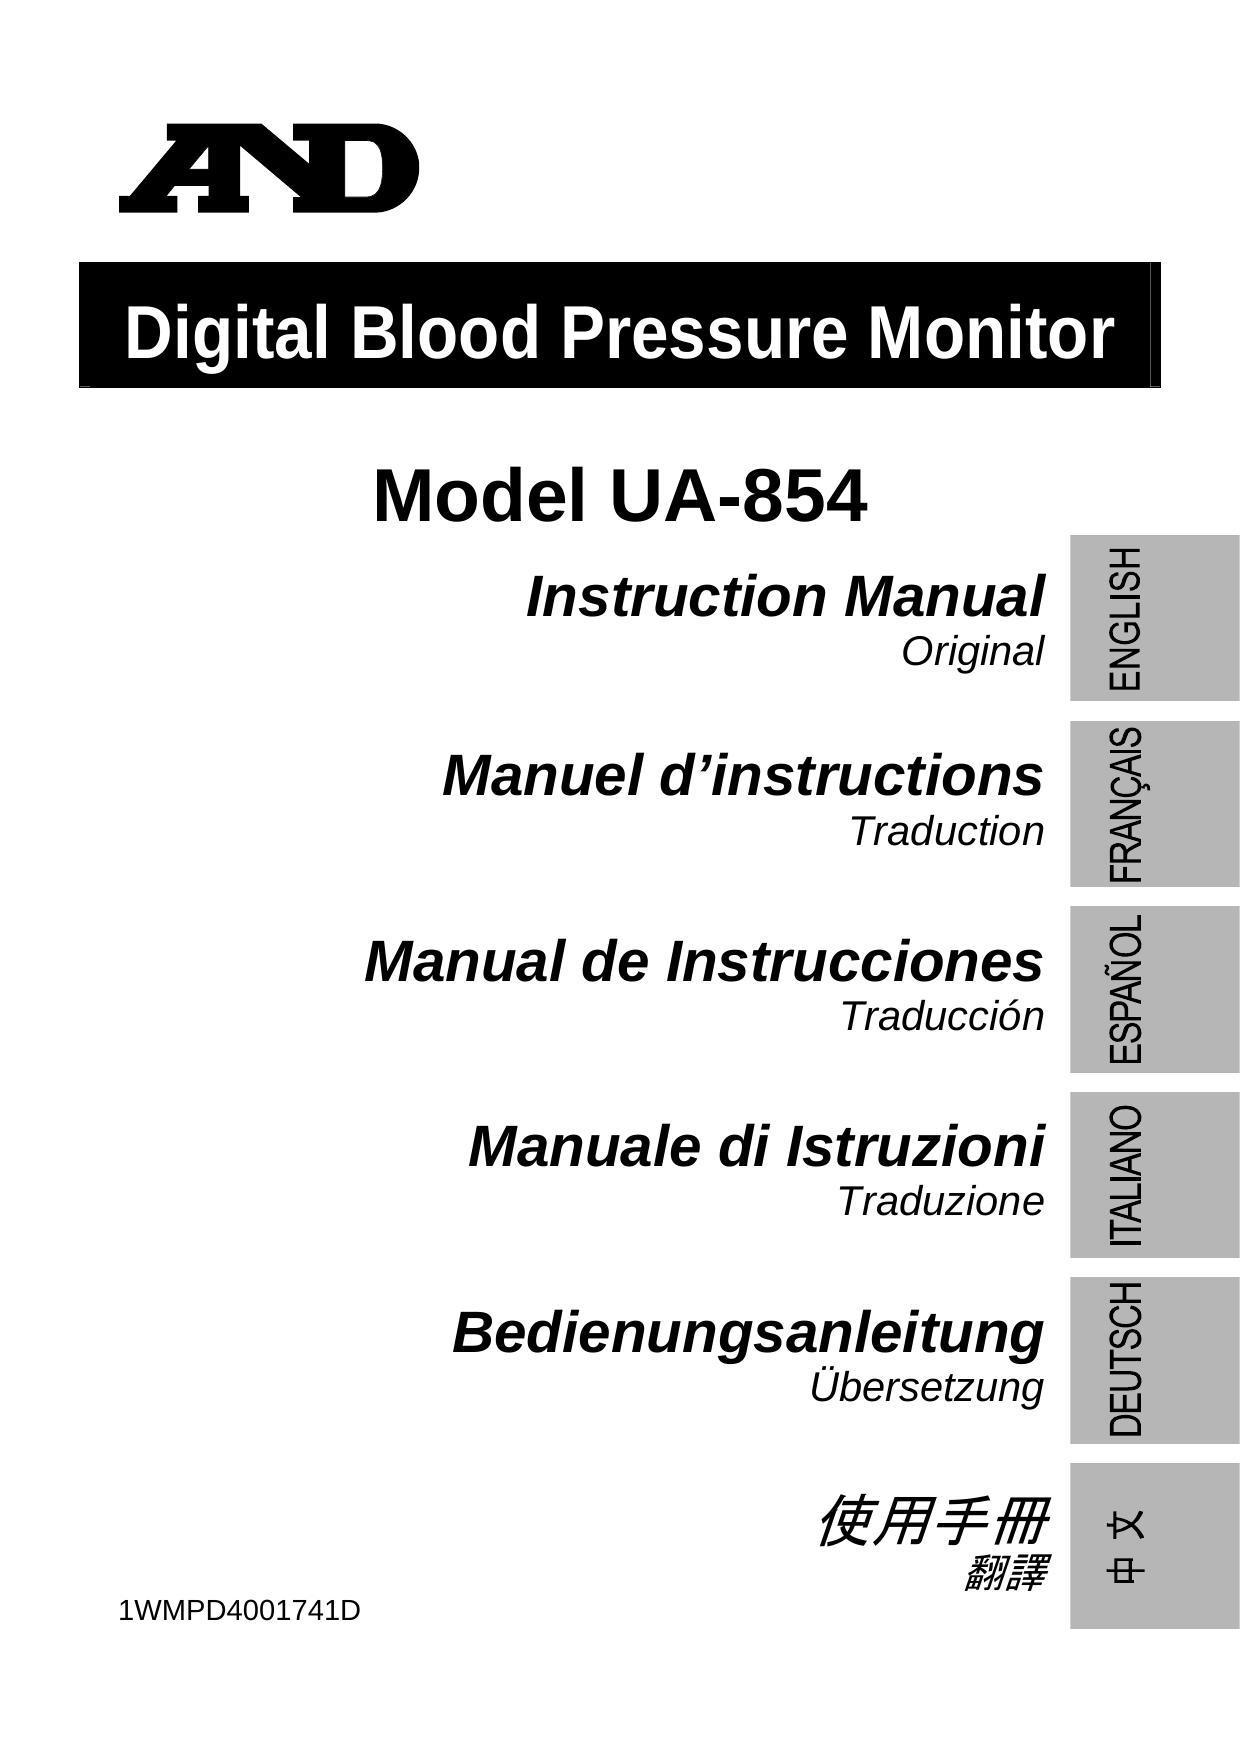 ad-digital-blood-pressure-monitor-model-ua-854-instruction-manual.pdf